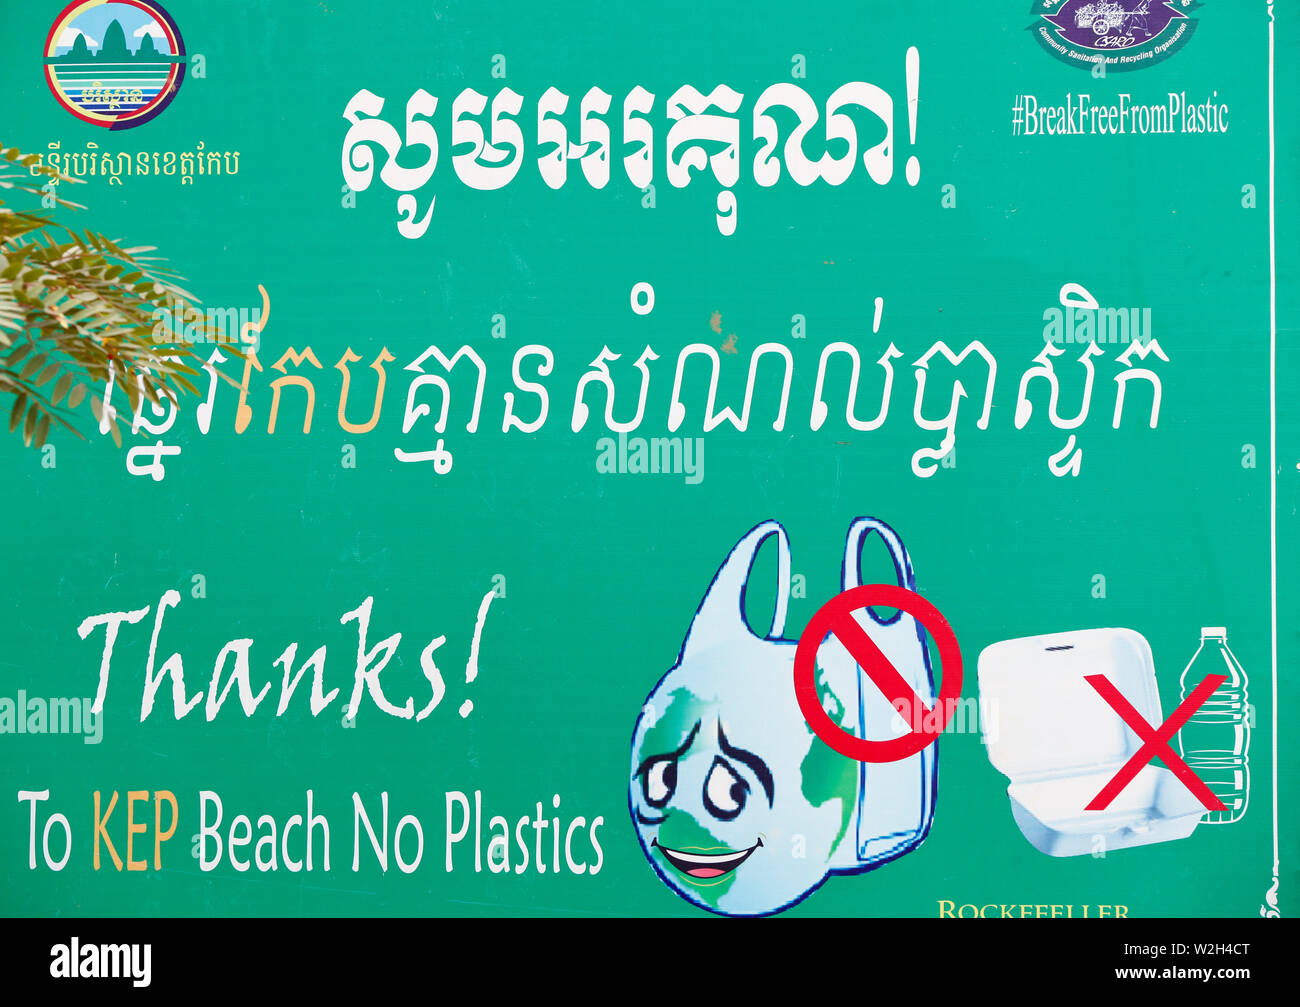 Break free from plastic.  Keep beach no plastics.  Kep. Cambodia. Stock Photo